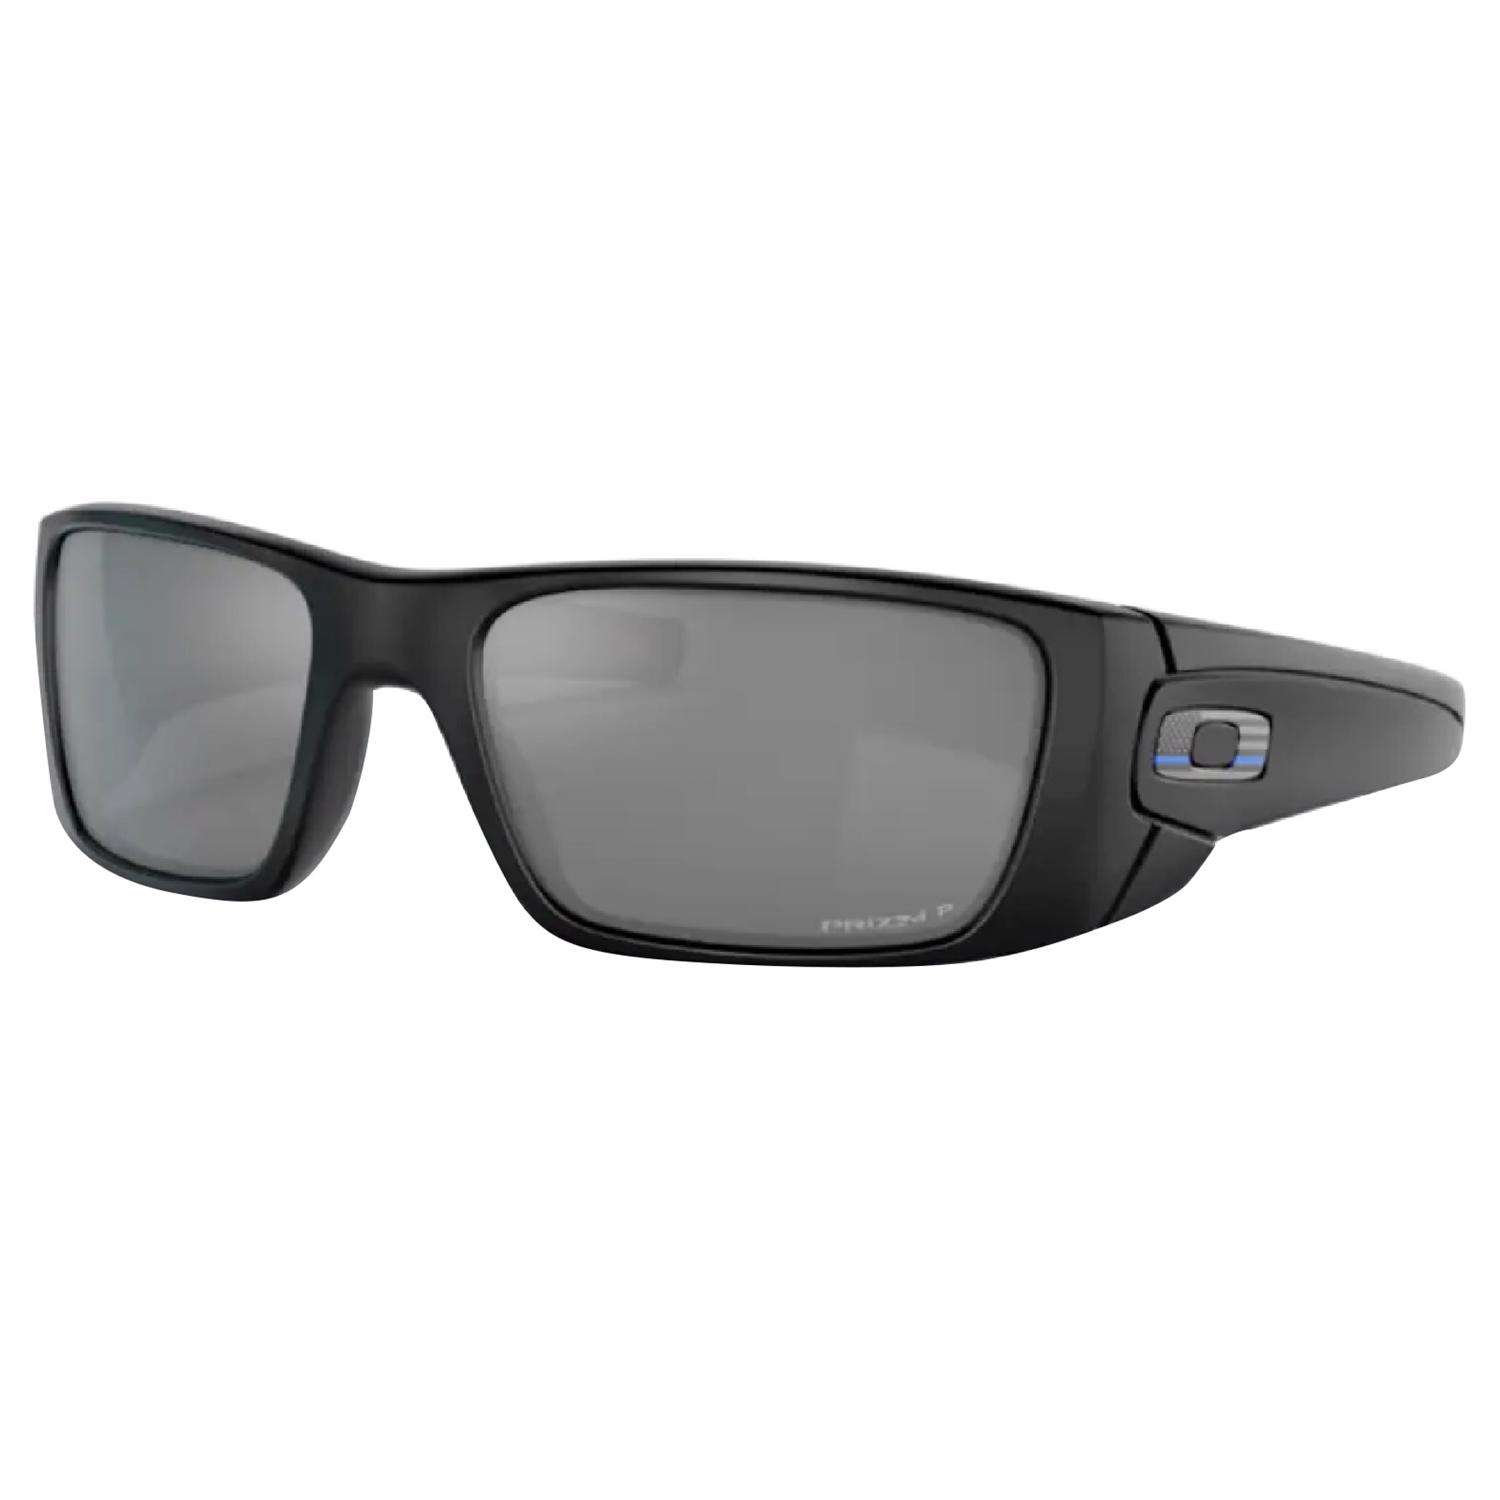 Oakley Fuel Cell Black/Gray Sunglasses - Ace Hardware